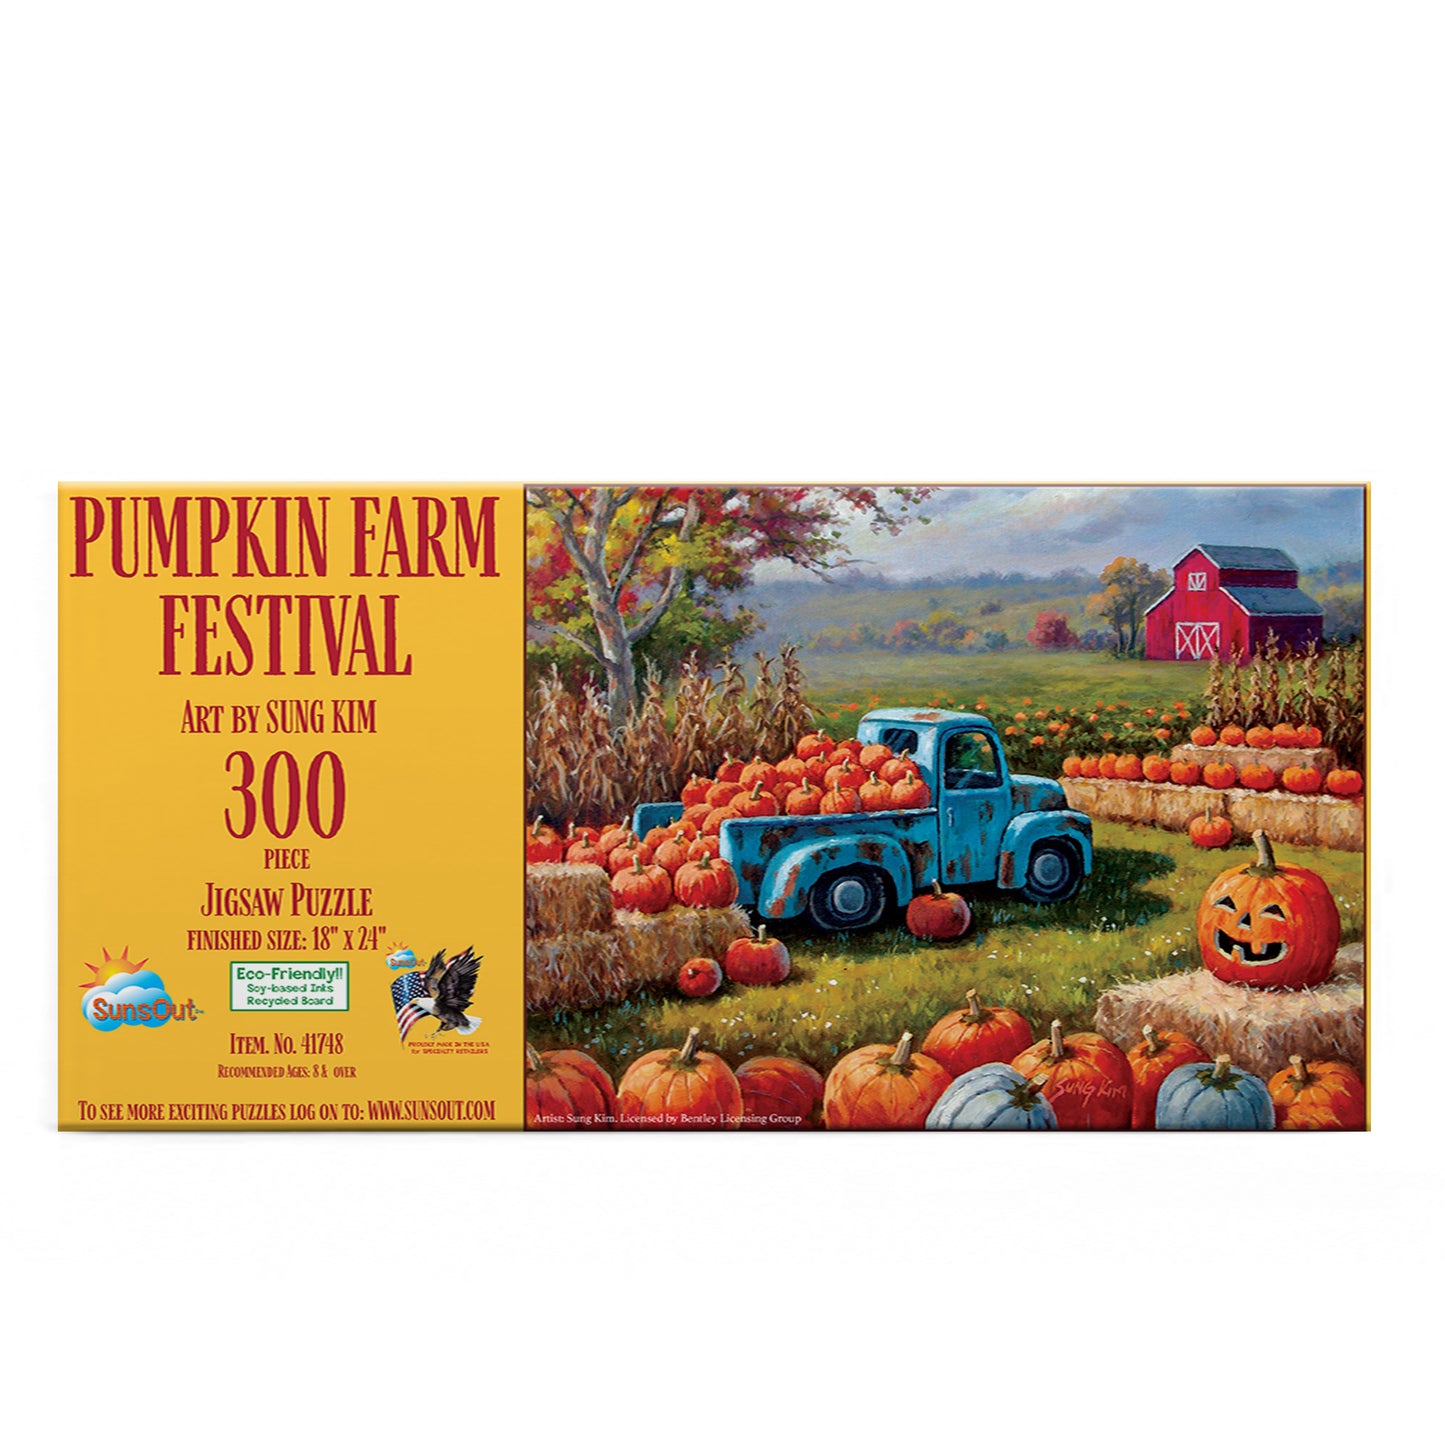 Pumpkin Farm Festival - 300 Piece Jigsaw Puzzle